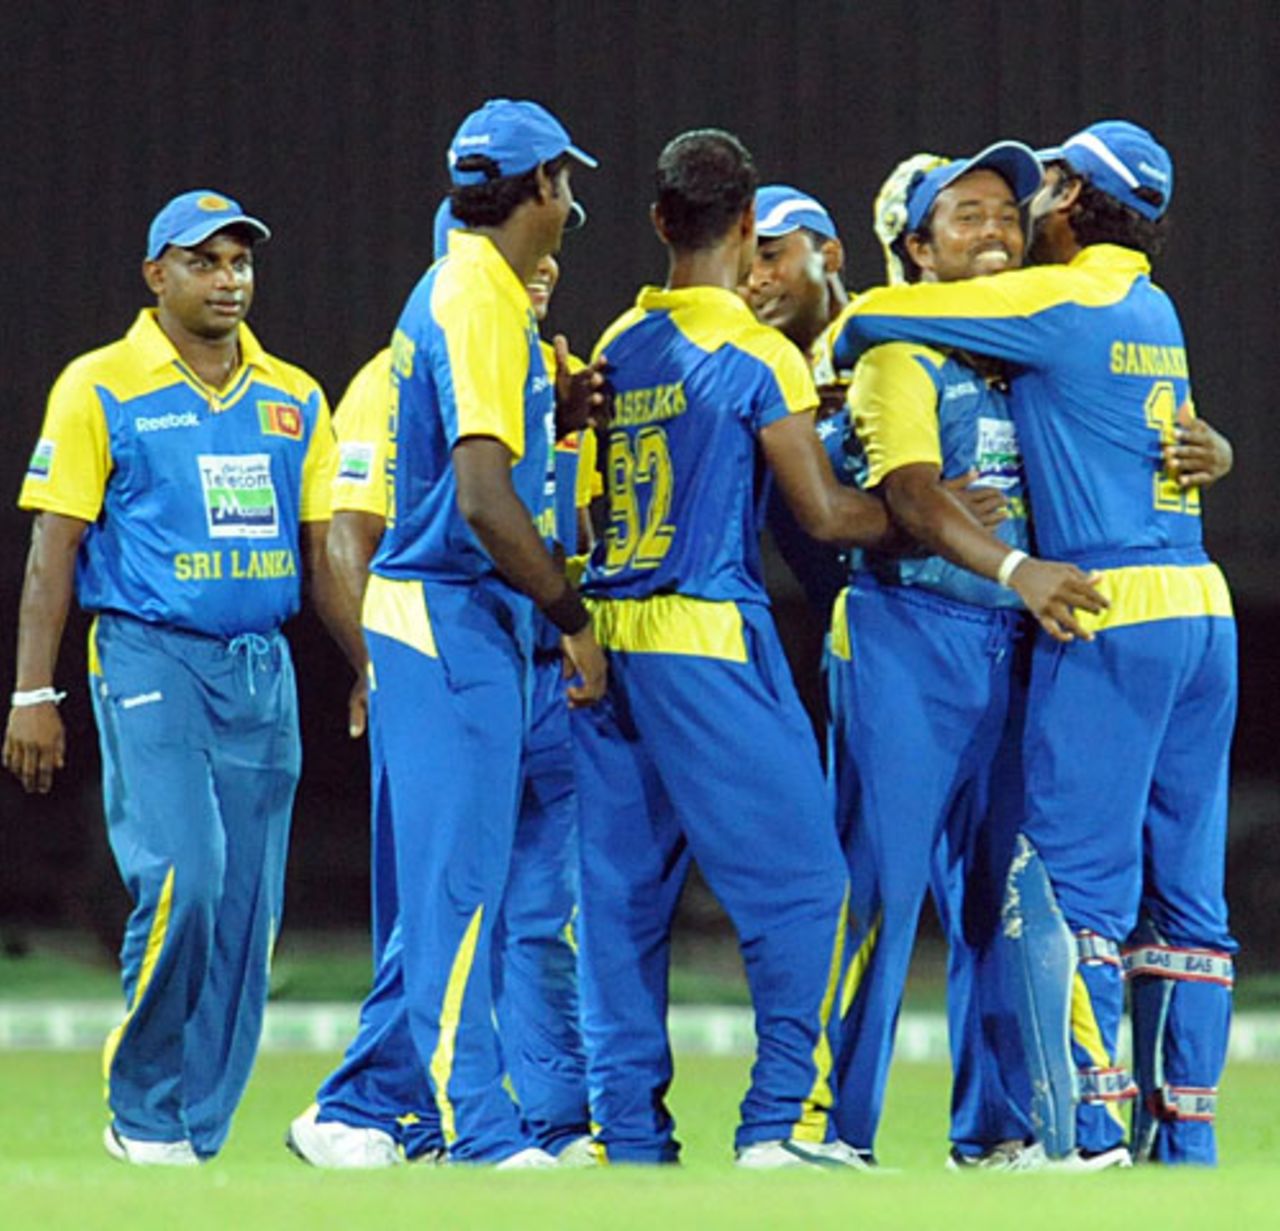 Malinga Bandara is congratulated for his catch to remove Jesse Ryder, Sri Lanka v New Zealand, 1st Twenty20, Colombo, September 2, 2009